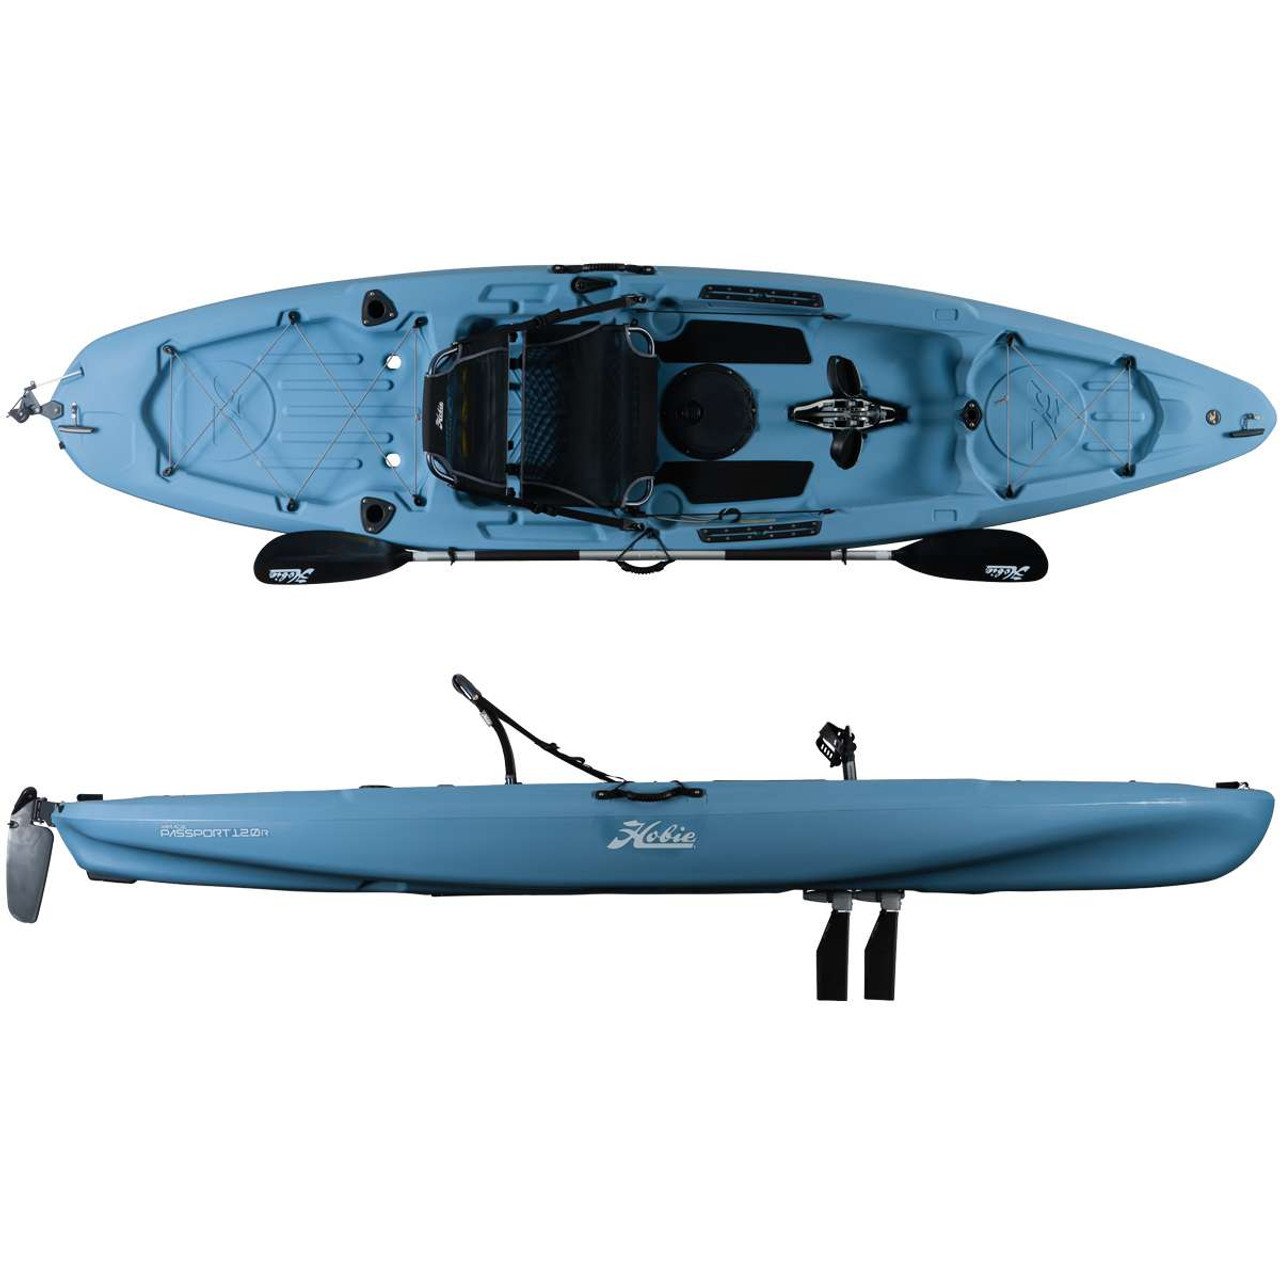 11＇InflatableFishingKayak,Pedal Boat,With Pedal Drive  System,Seat,FishingBracket